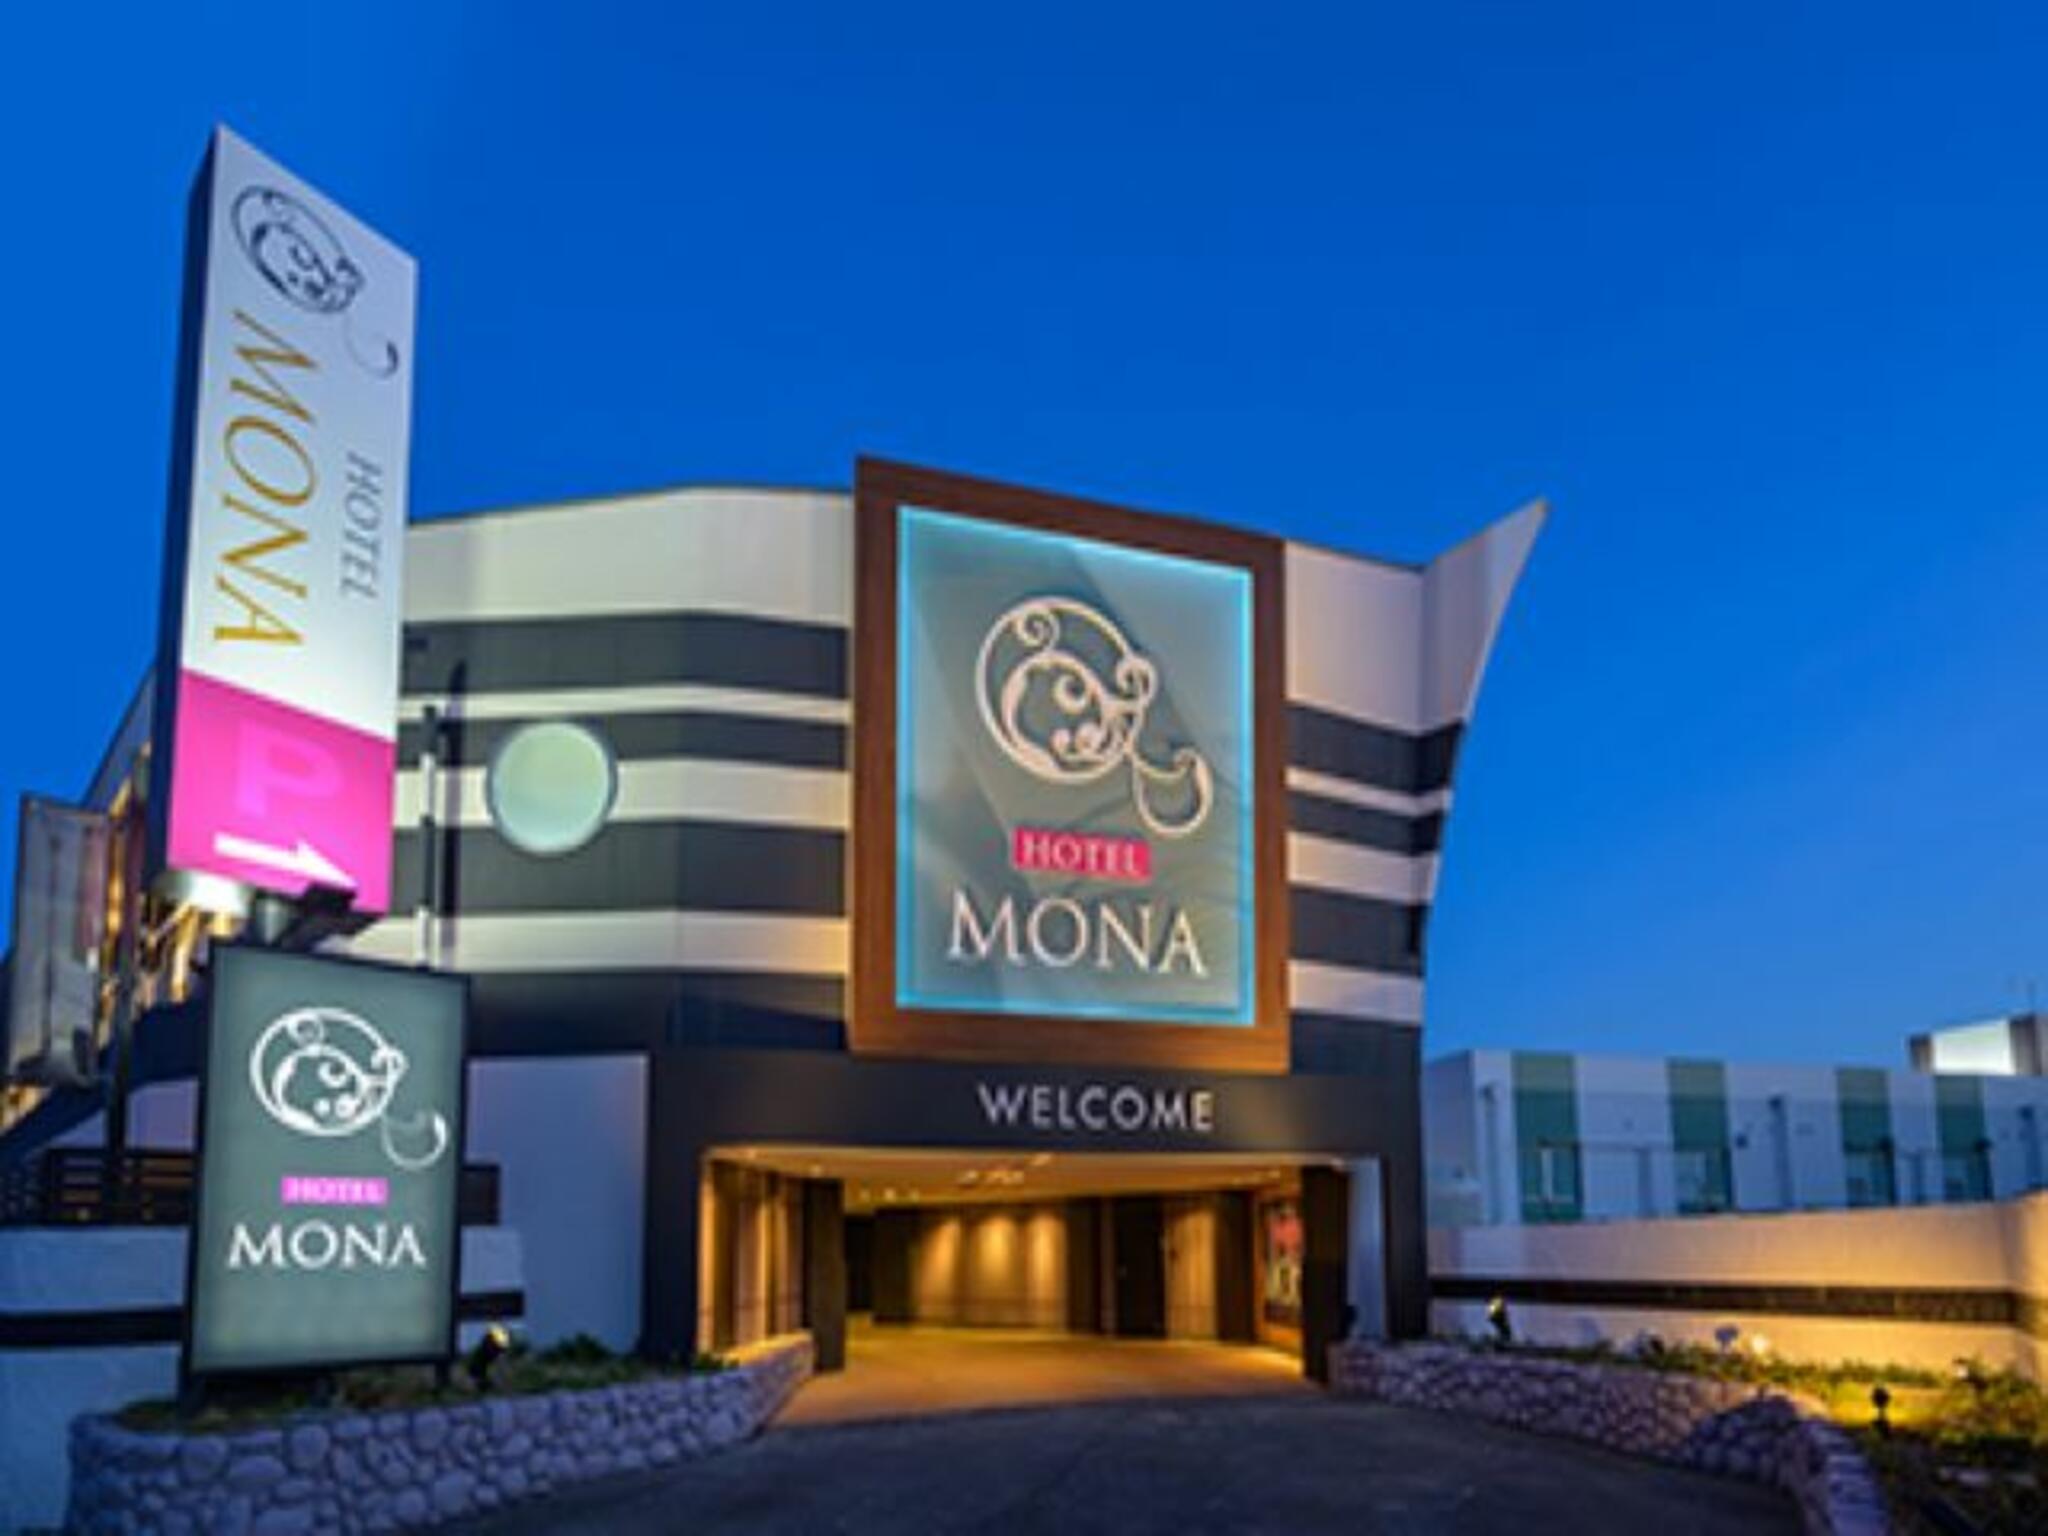 HOTEL MONAの代表写真3